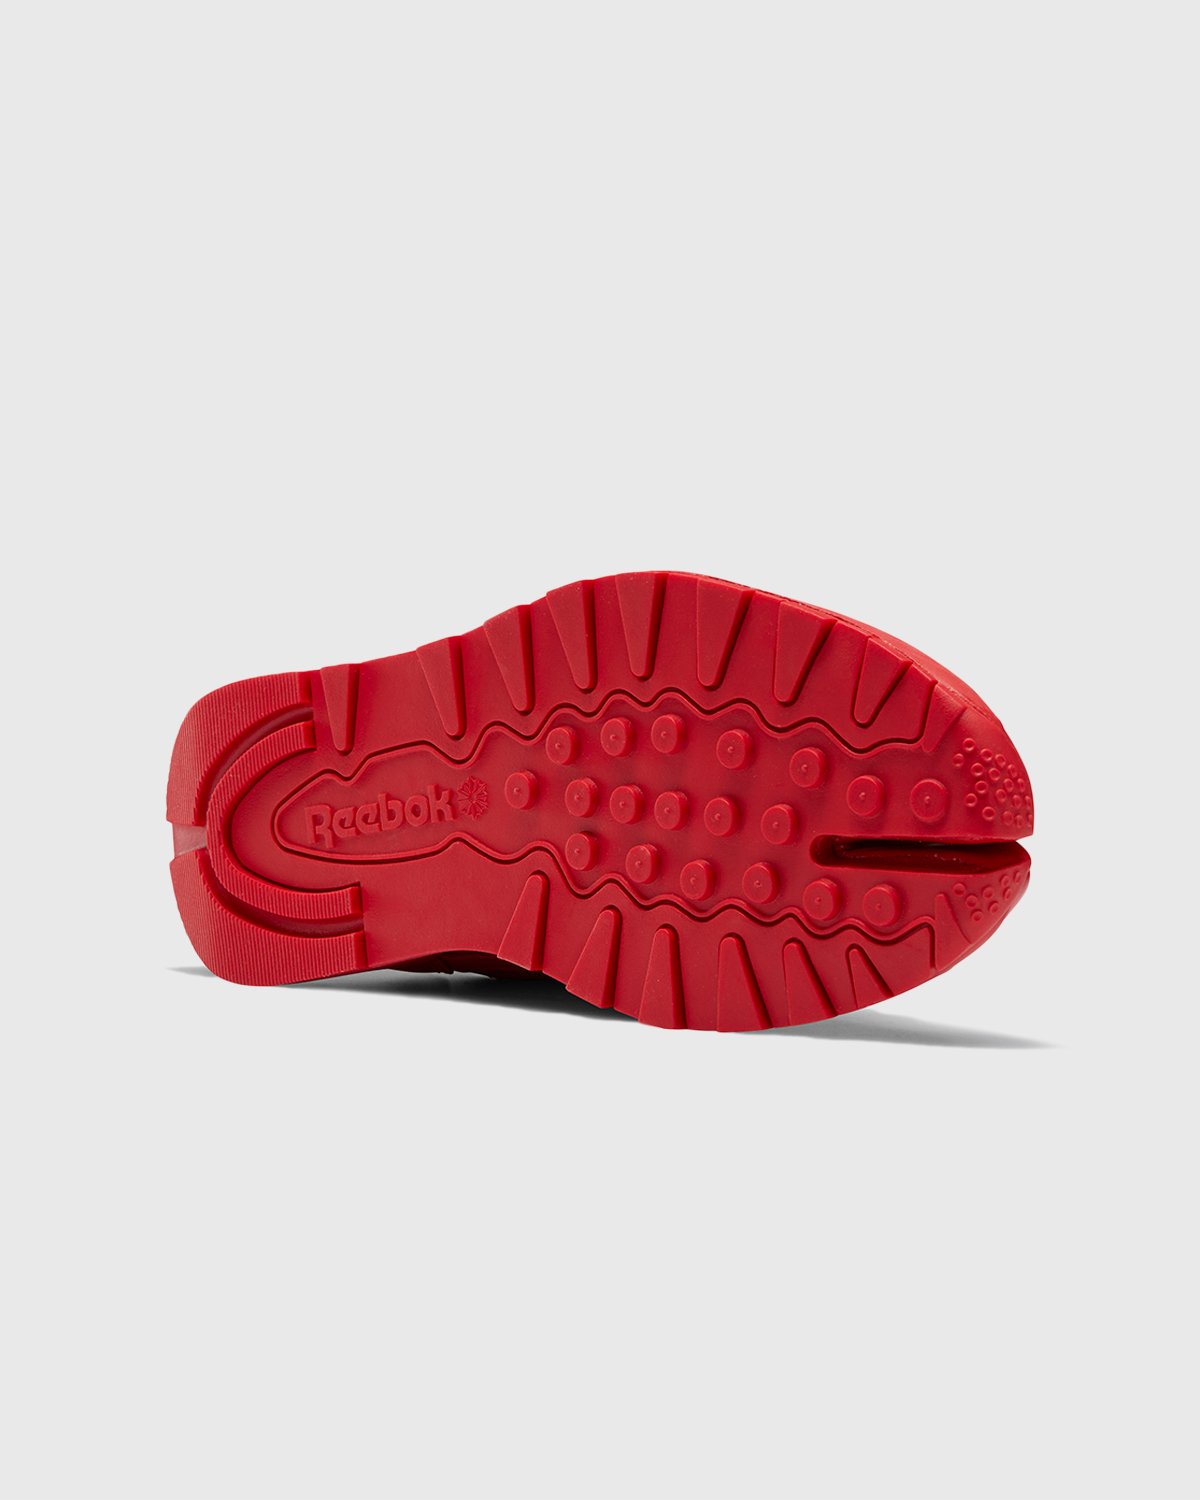 Maison Margiela x Reebok - Classic Leather Tabi Red - Footwear - Red - Image 7